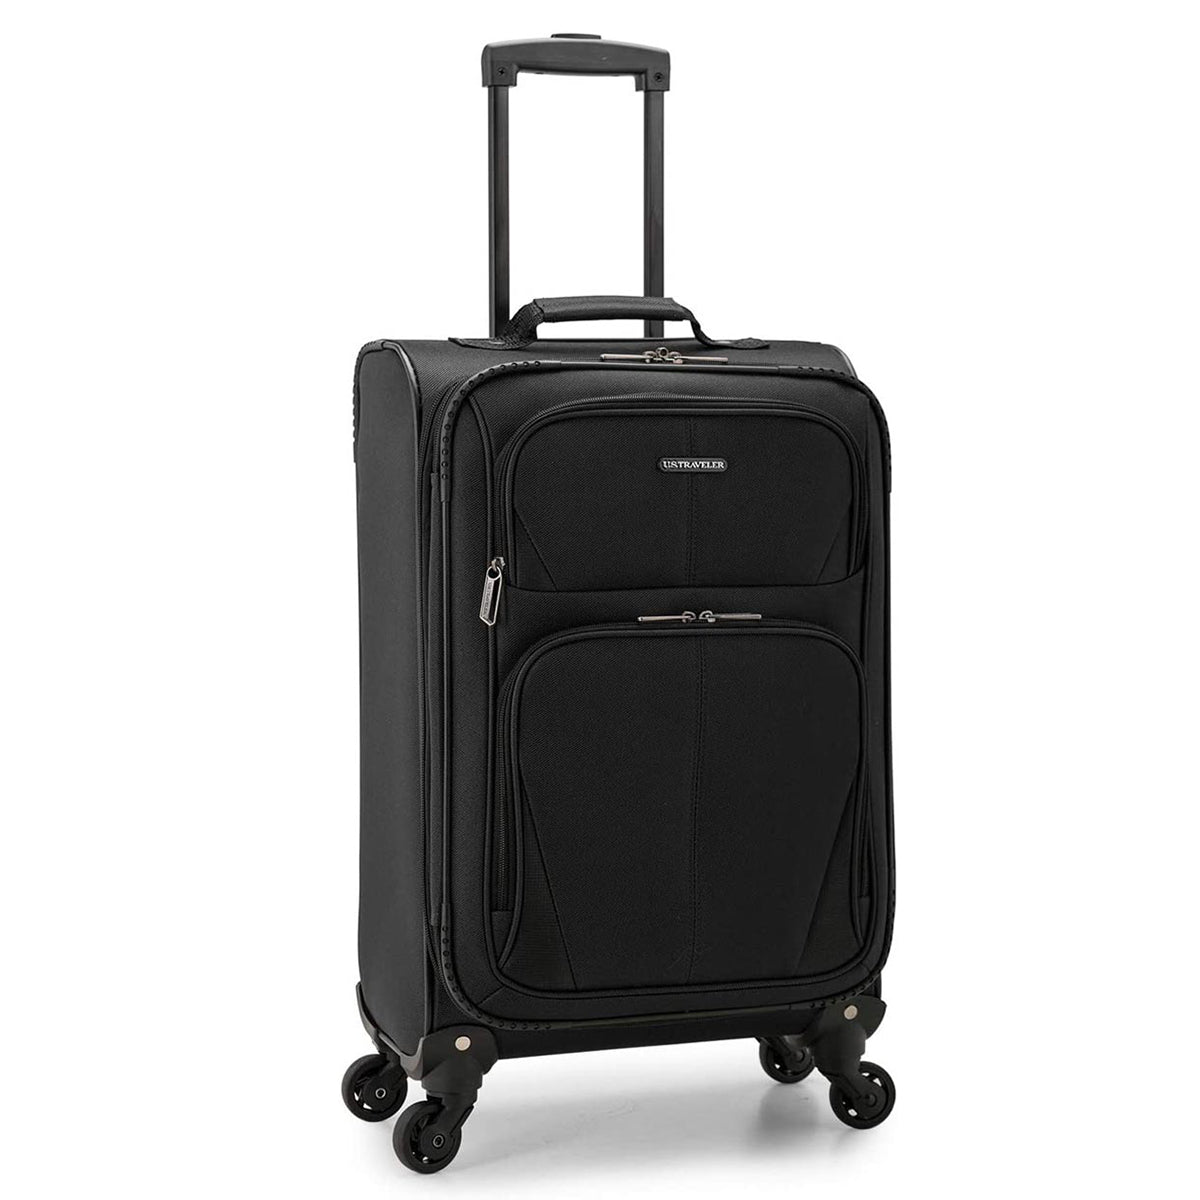  U.S. Traveler Aviron Bay Expandable Softside Luggage with Spinner Wheels, Carry-on 